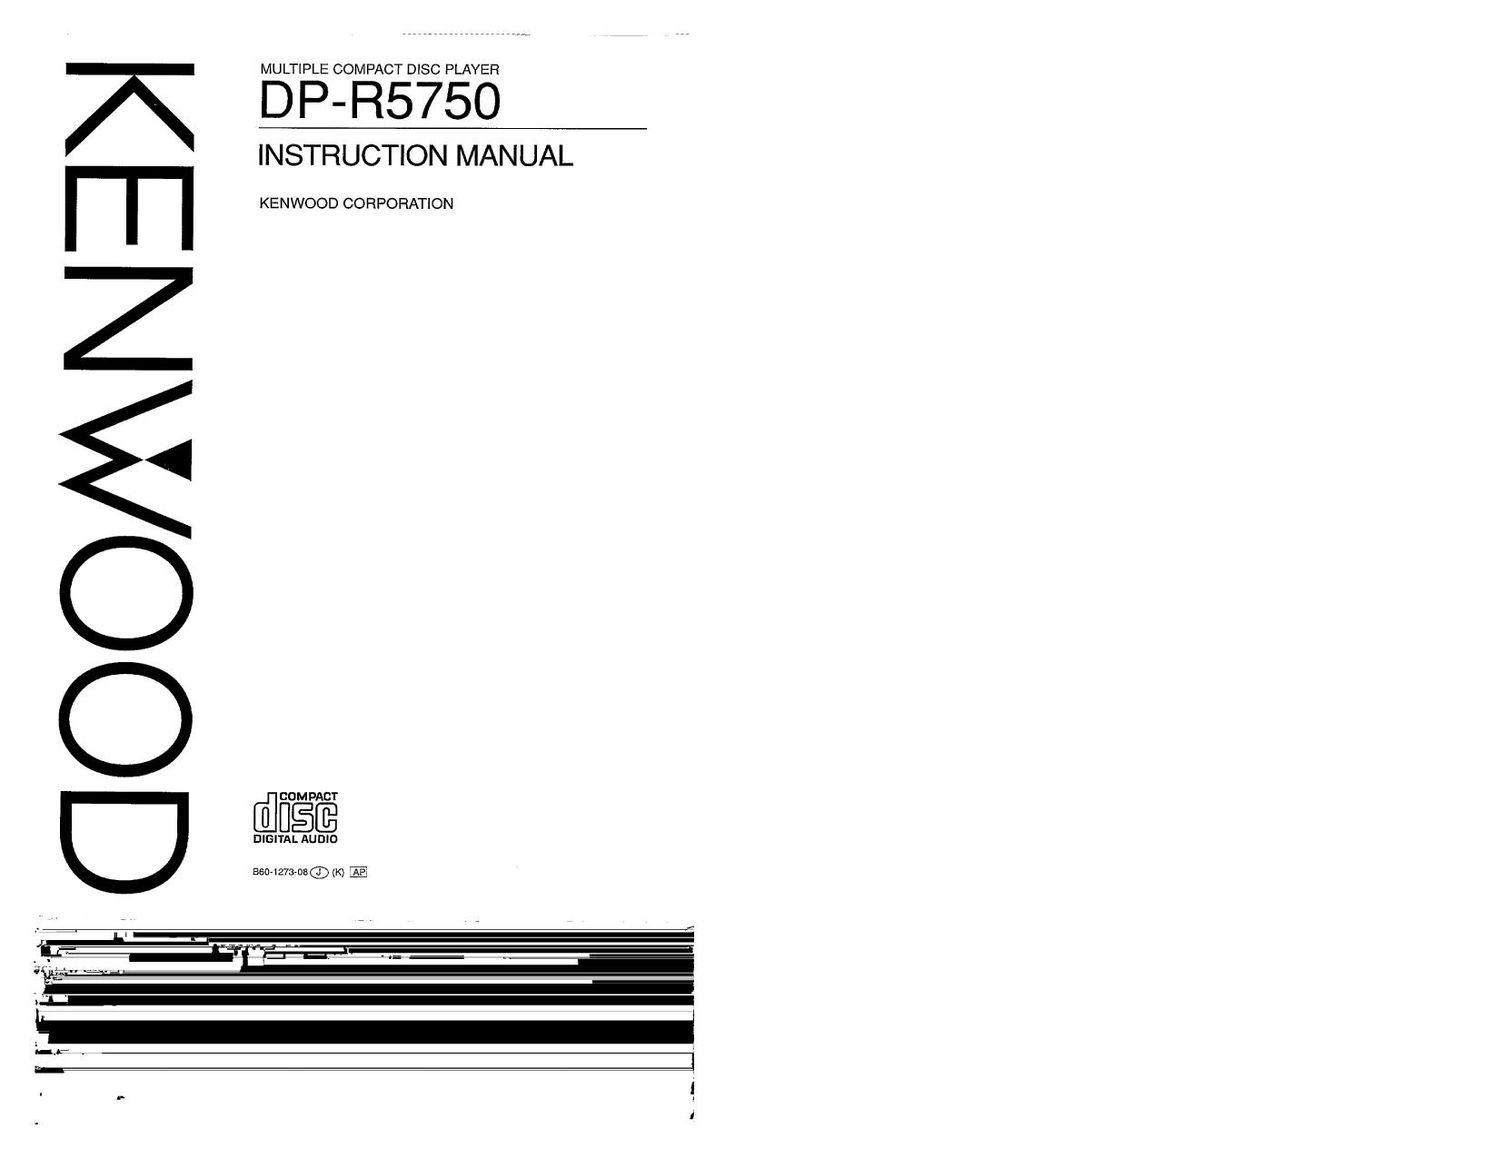 Kenwood DPR 5750 Owners Manual